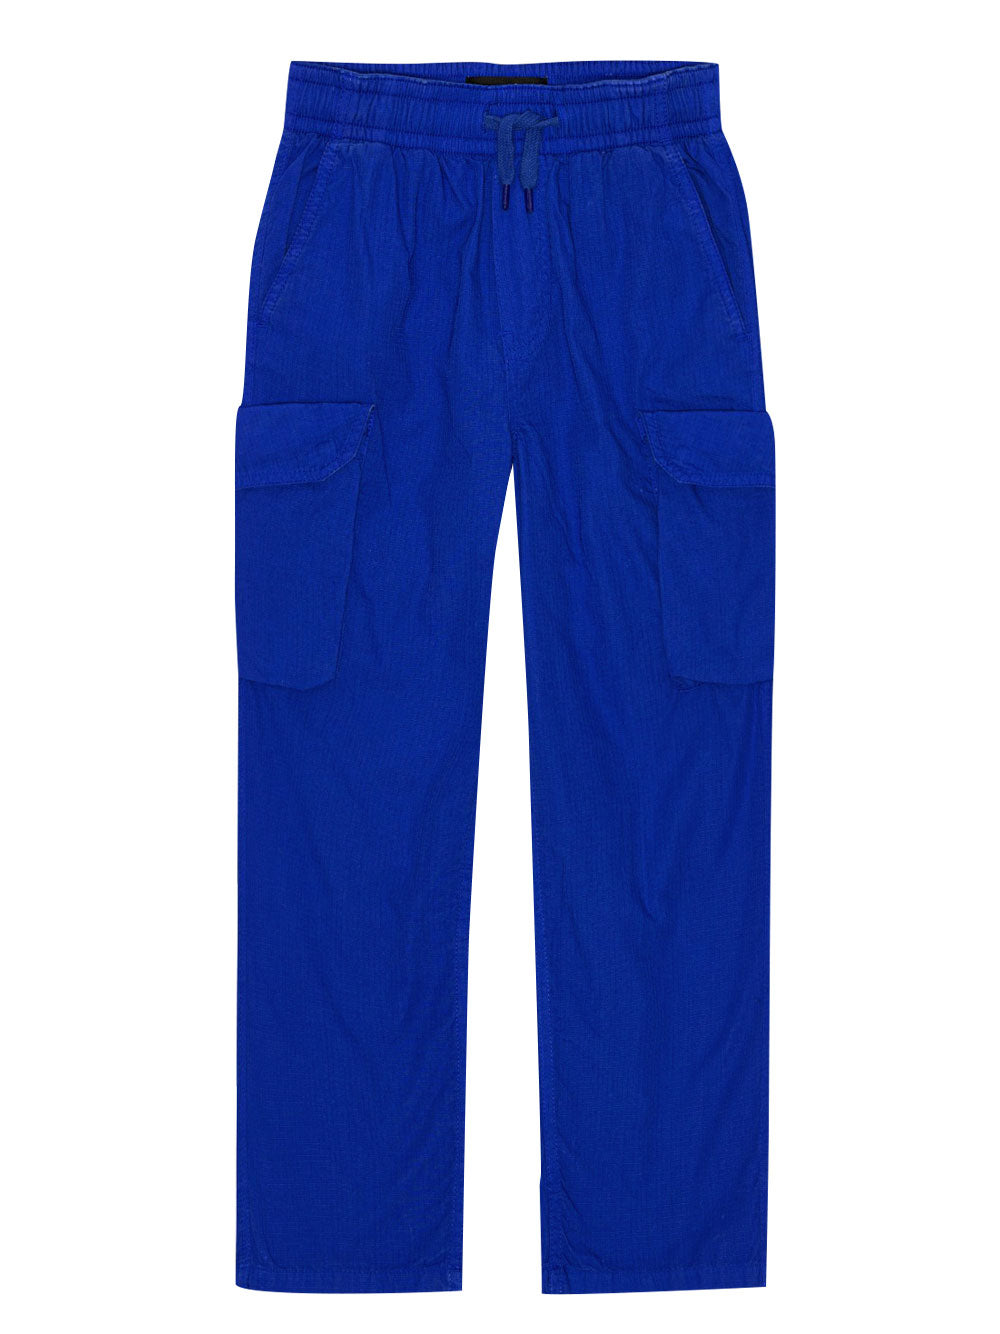 Argo Reef Blue Pants